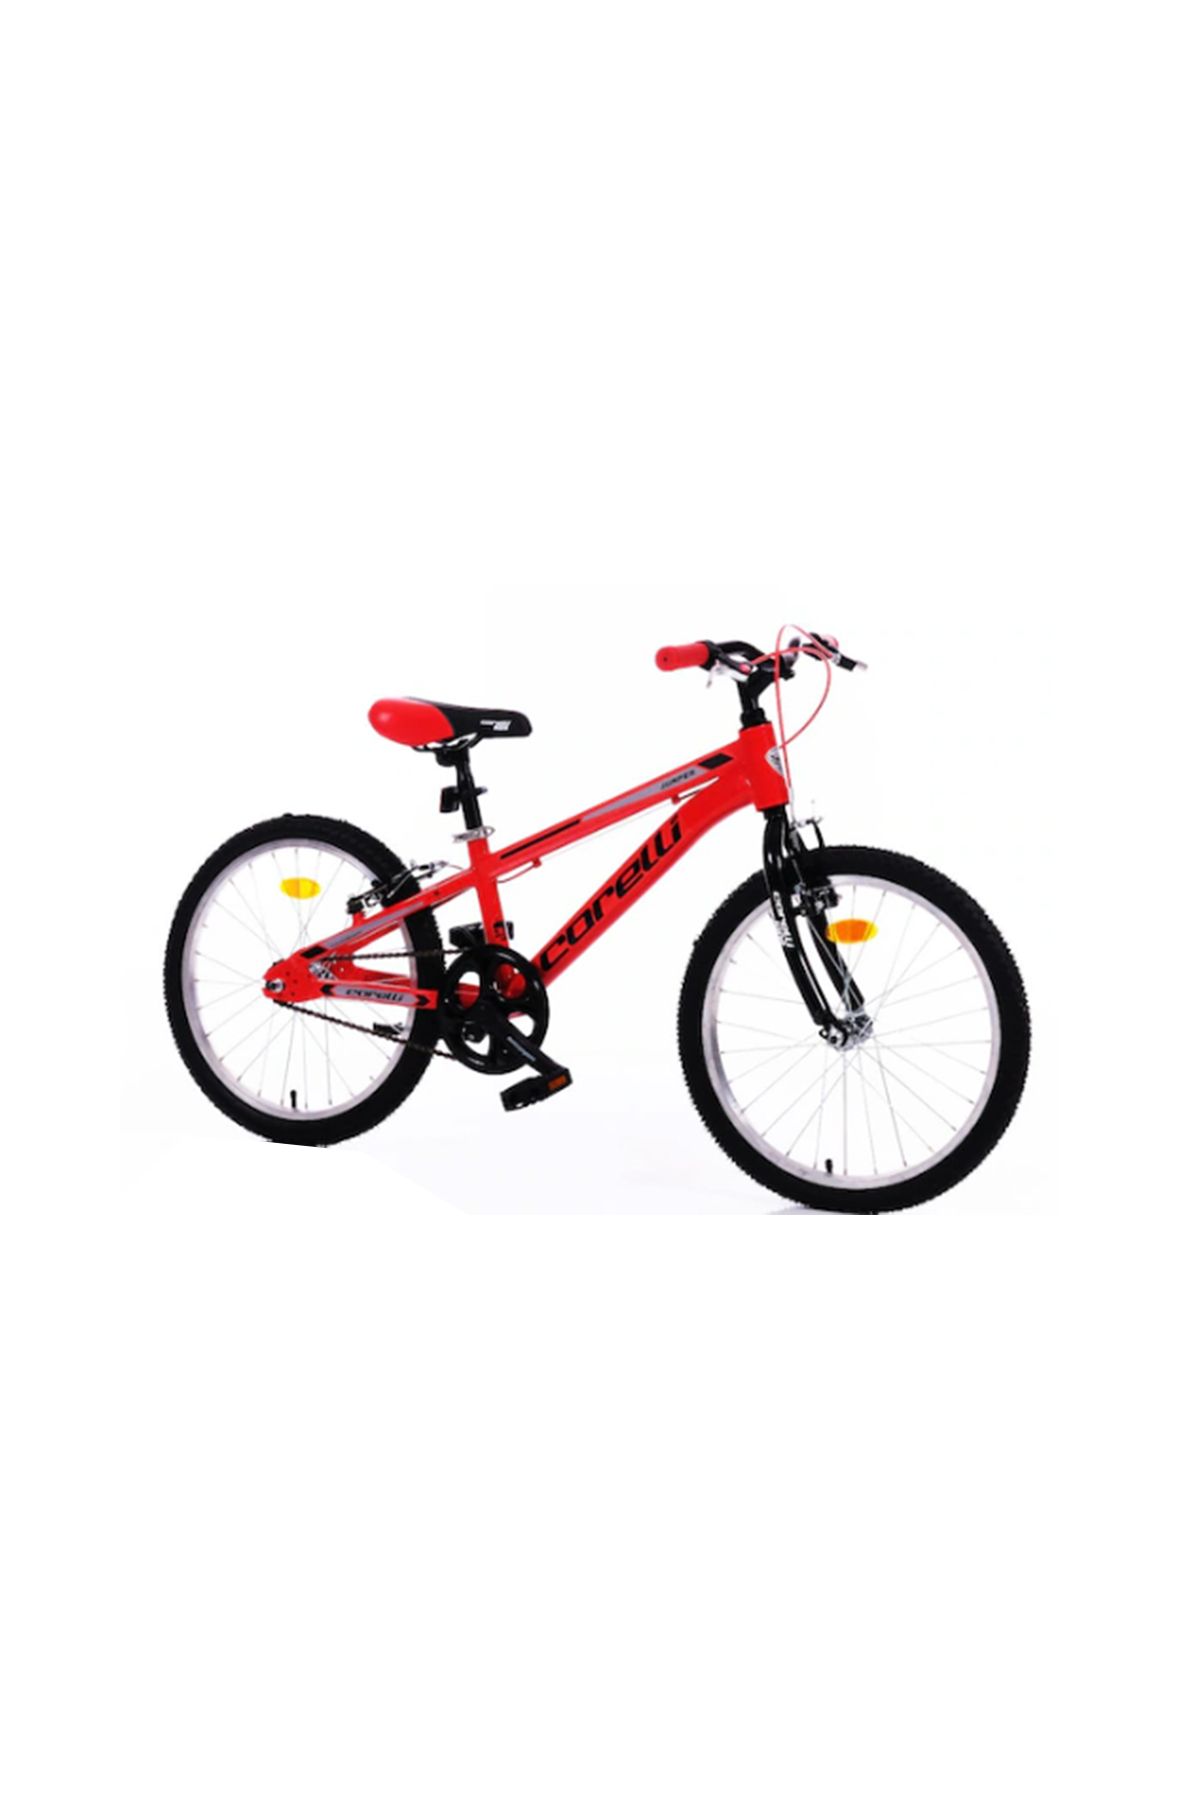 Corelli Jumper 20'' Jant Çocuk Bisikleti - Kırmızı - Siyah / Gri